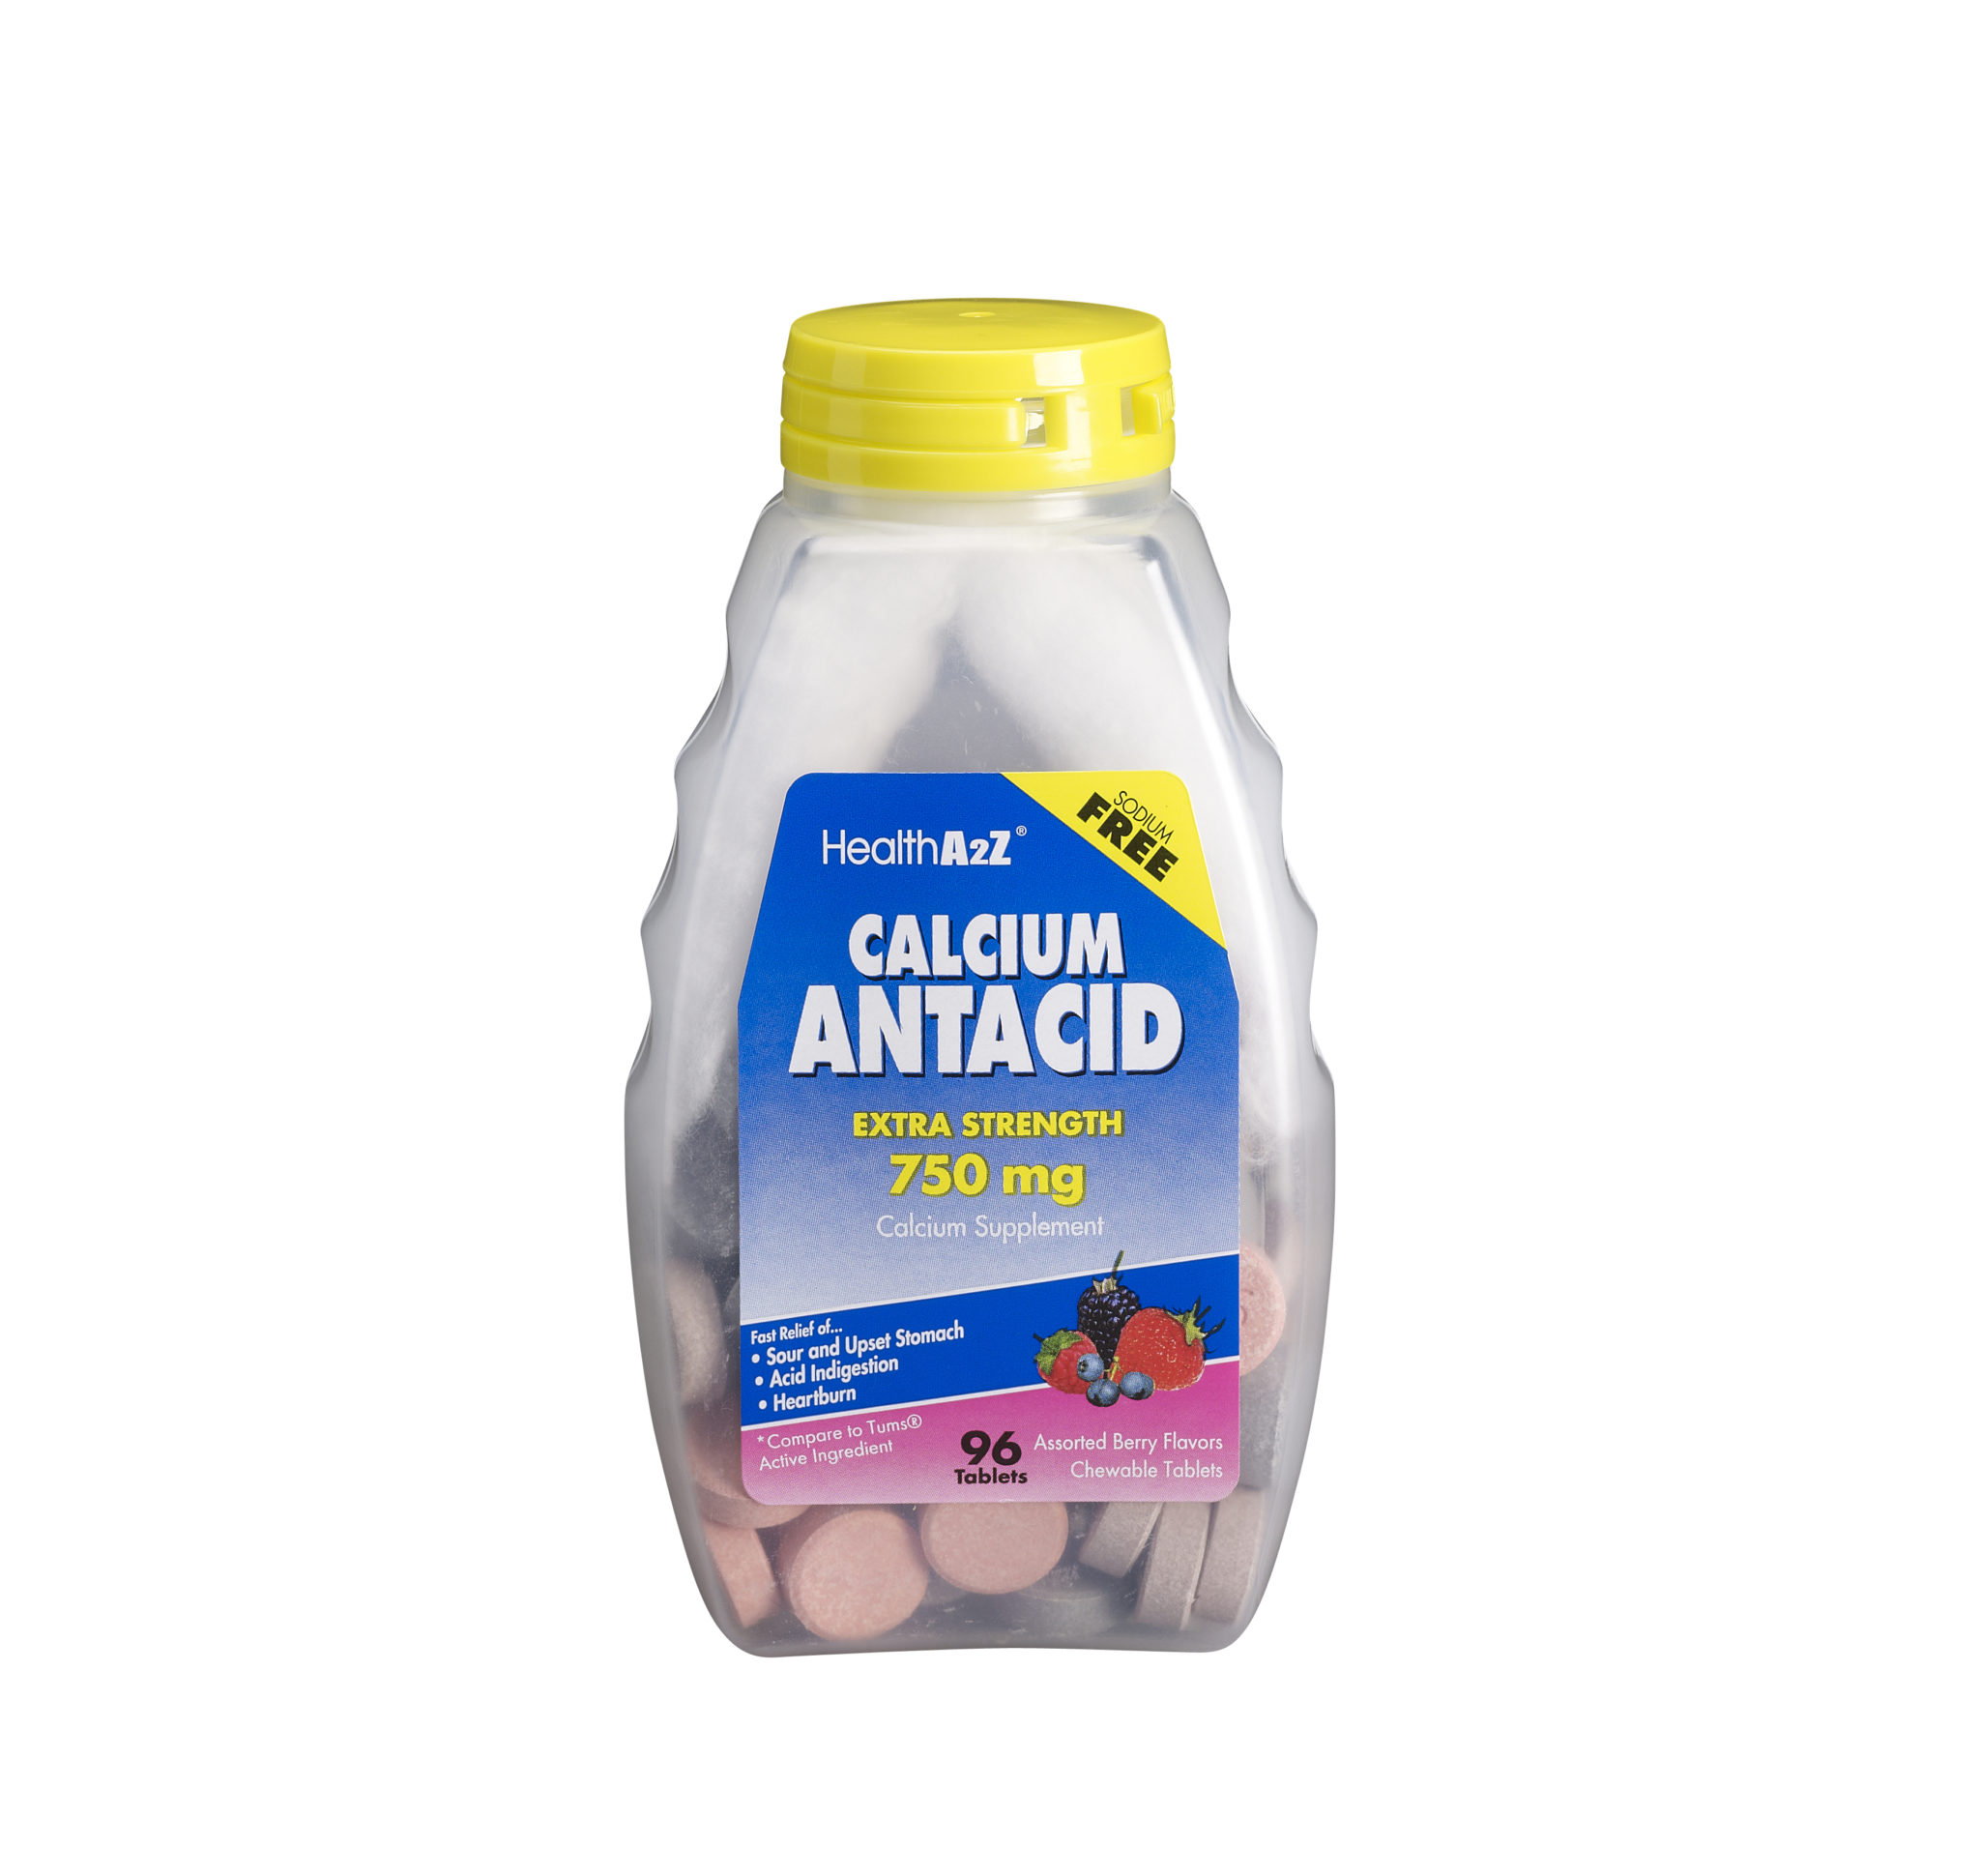 Health A2Z Calcium Antacid